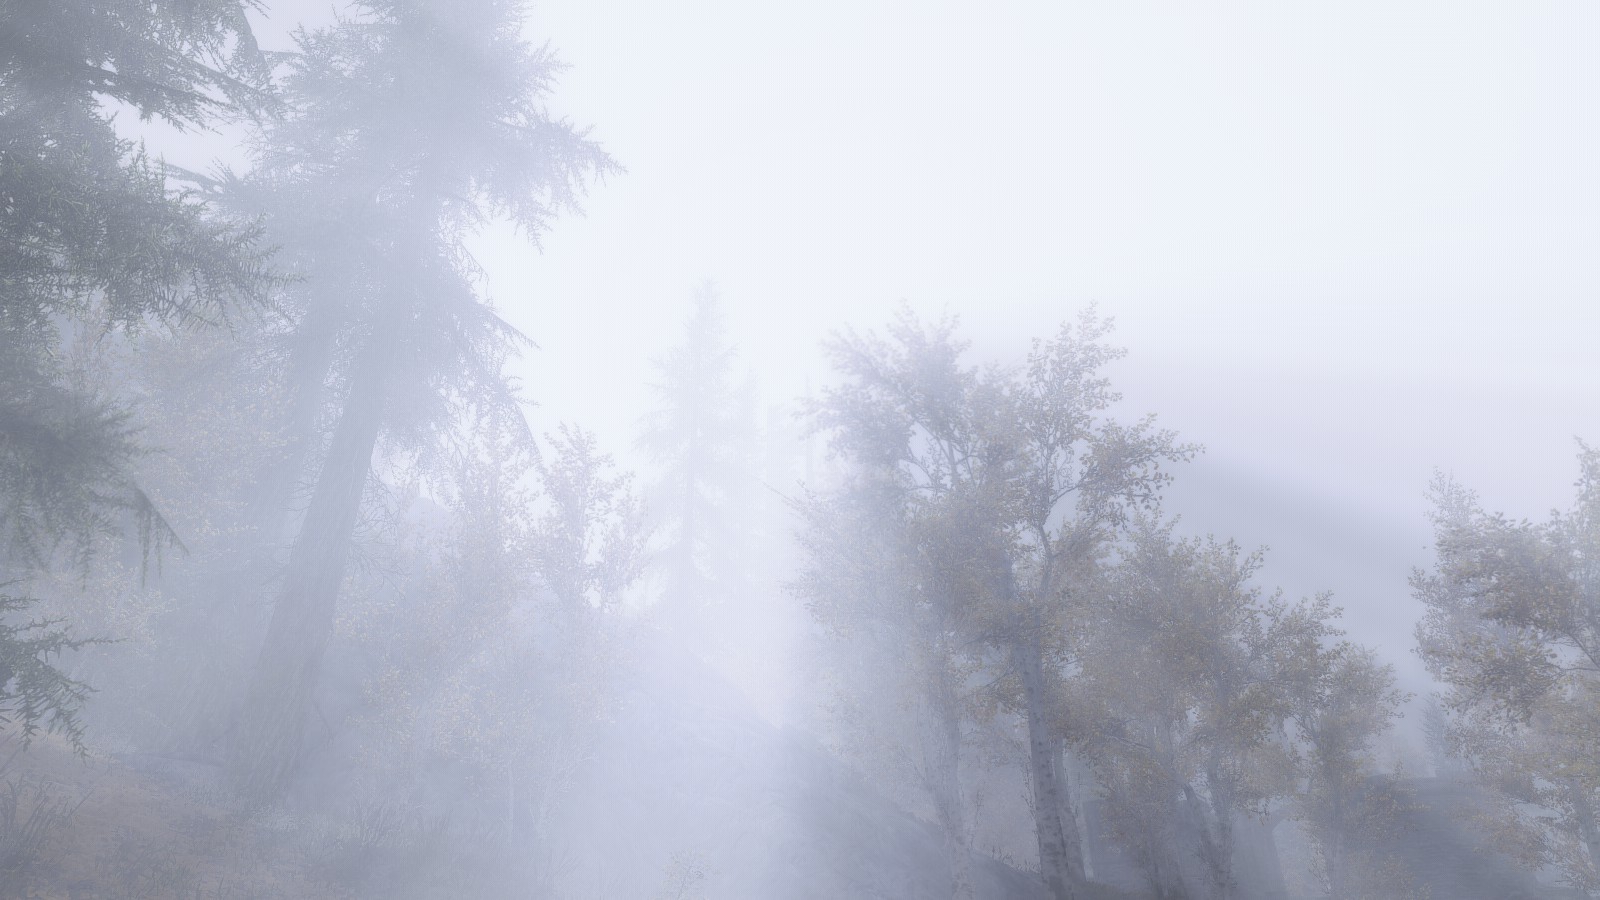 General 1600x900 The Elder Scrolls V: Skyrim environment mist forest